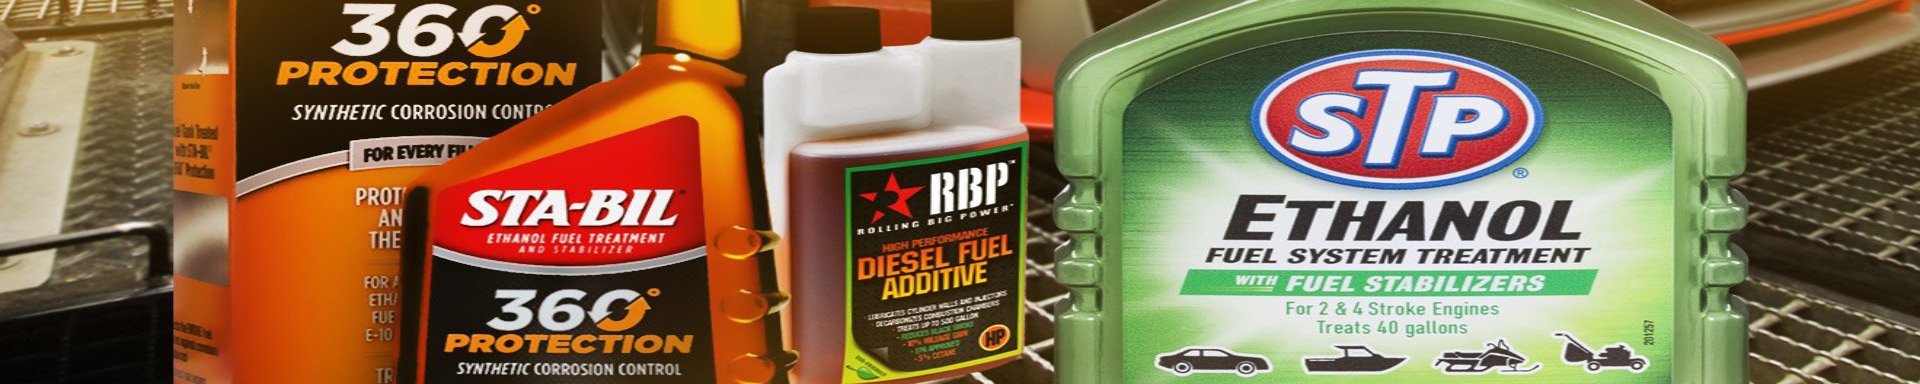 Fuel System Additives | RogueFuel.ca | Munro Industries rf-1007030713